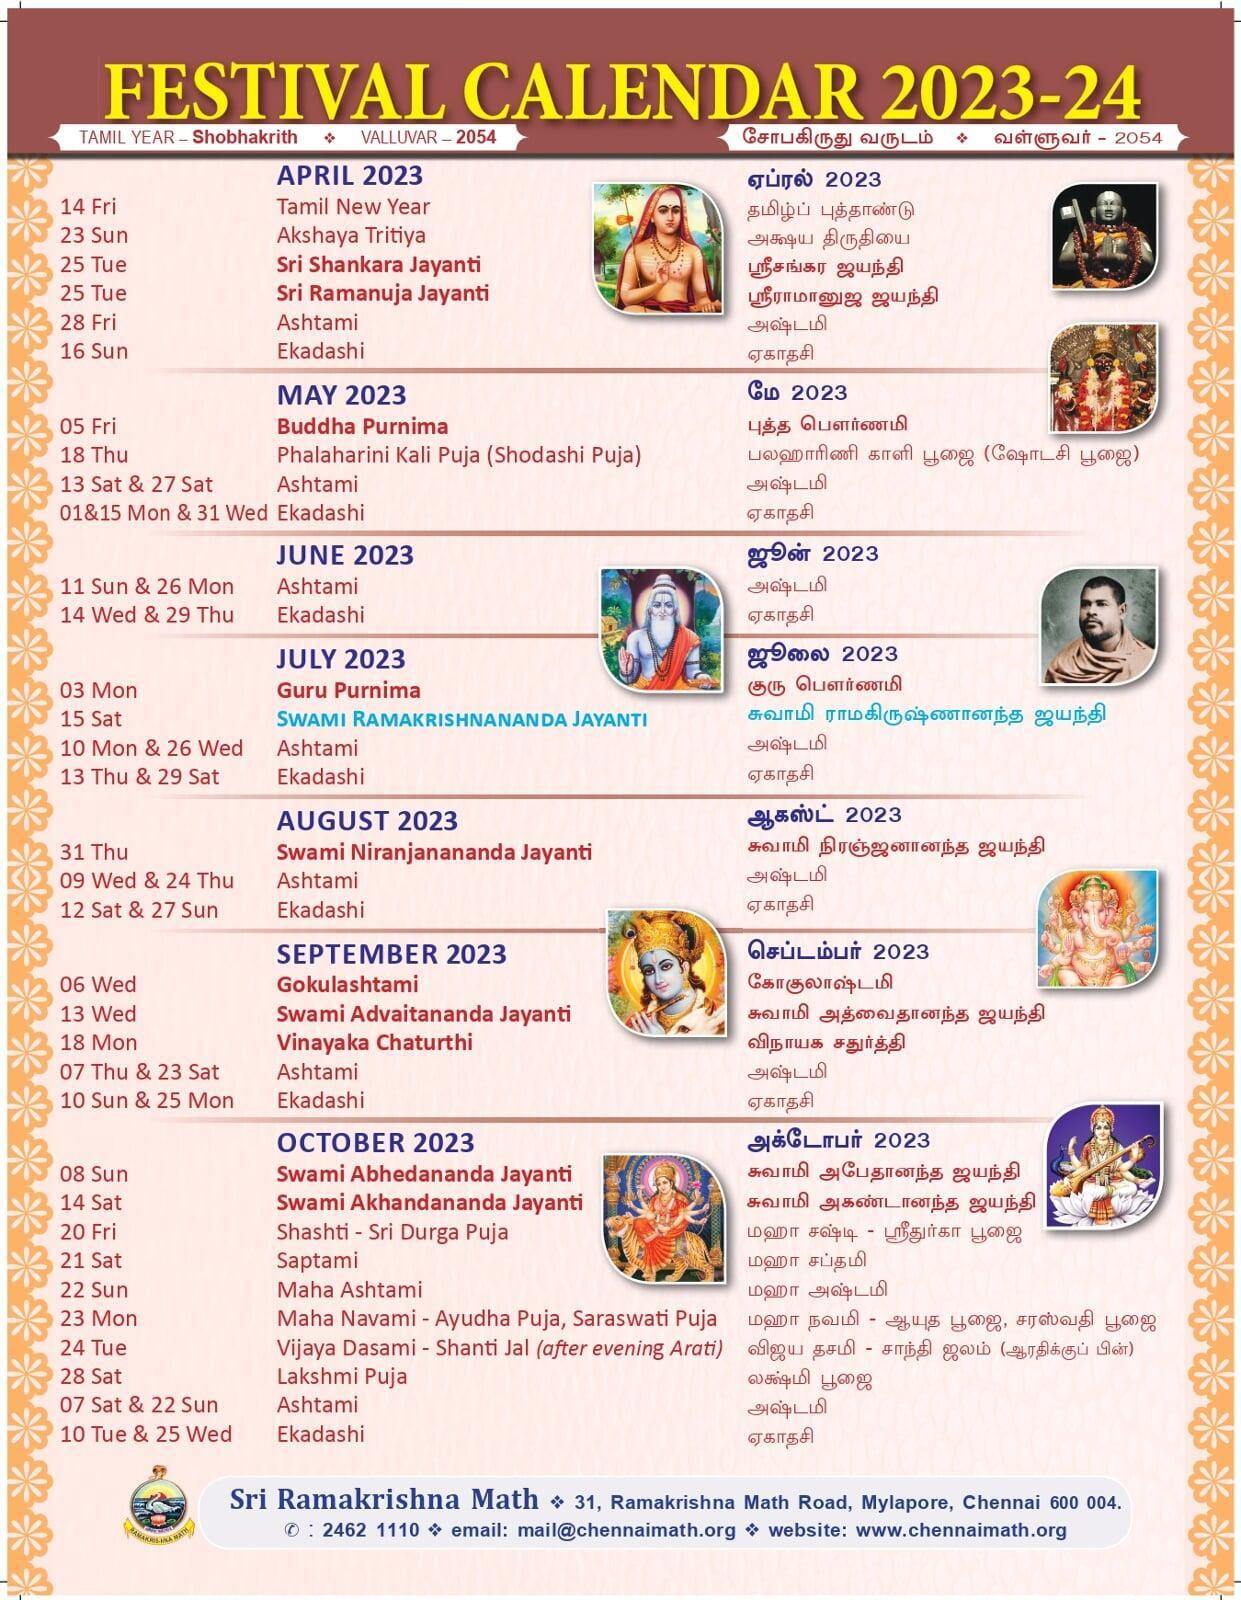 Festival Calendar 2023-24